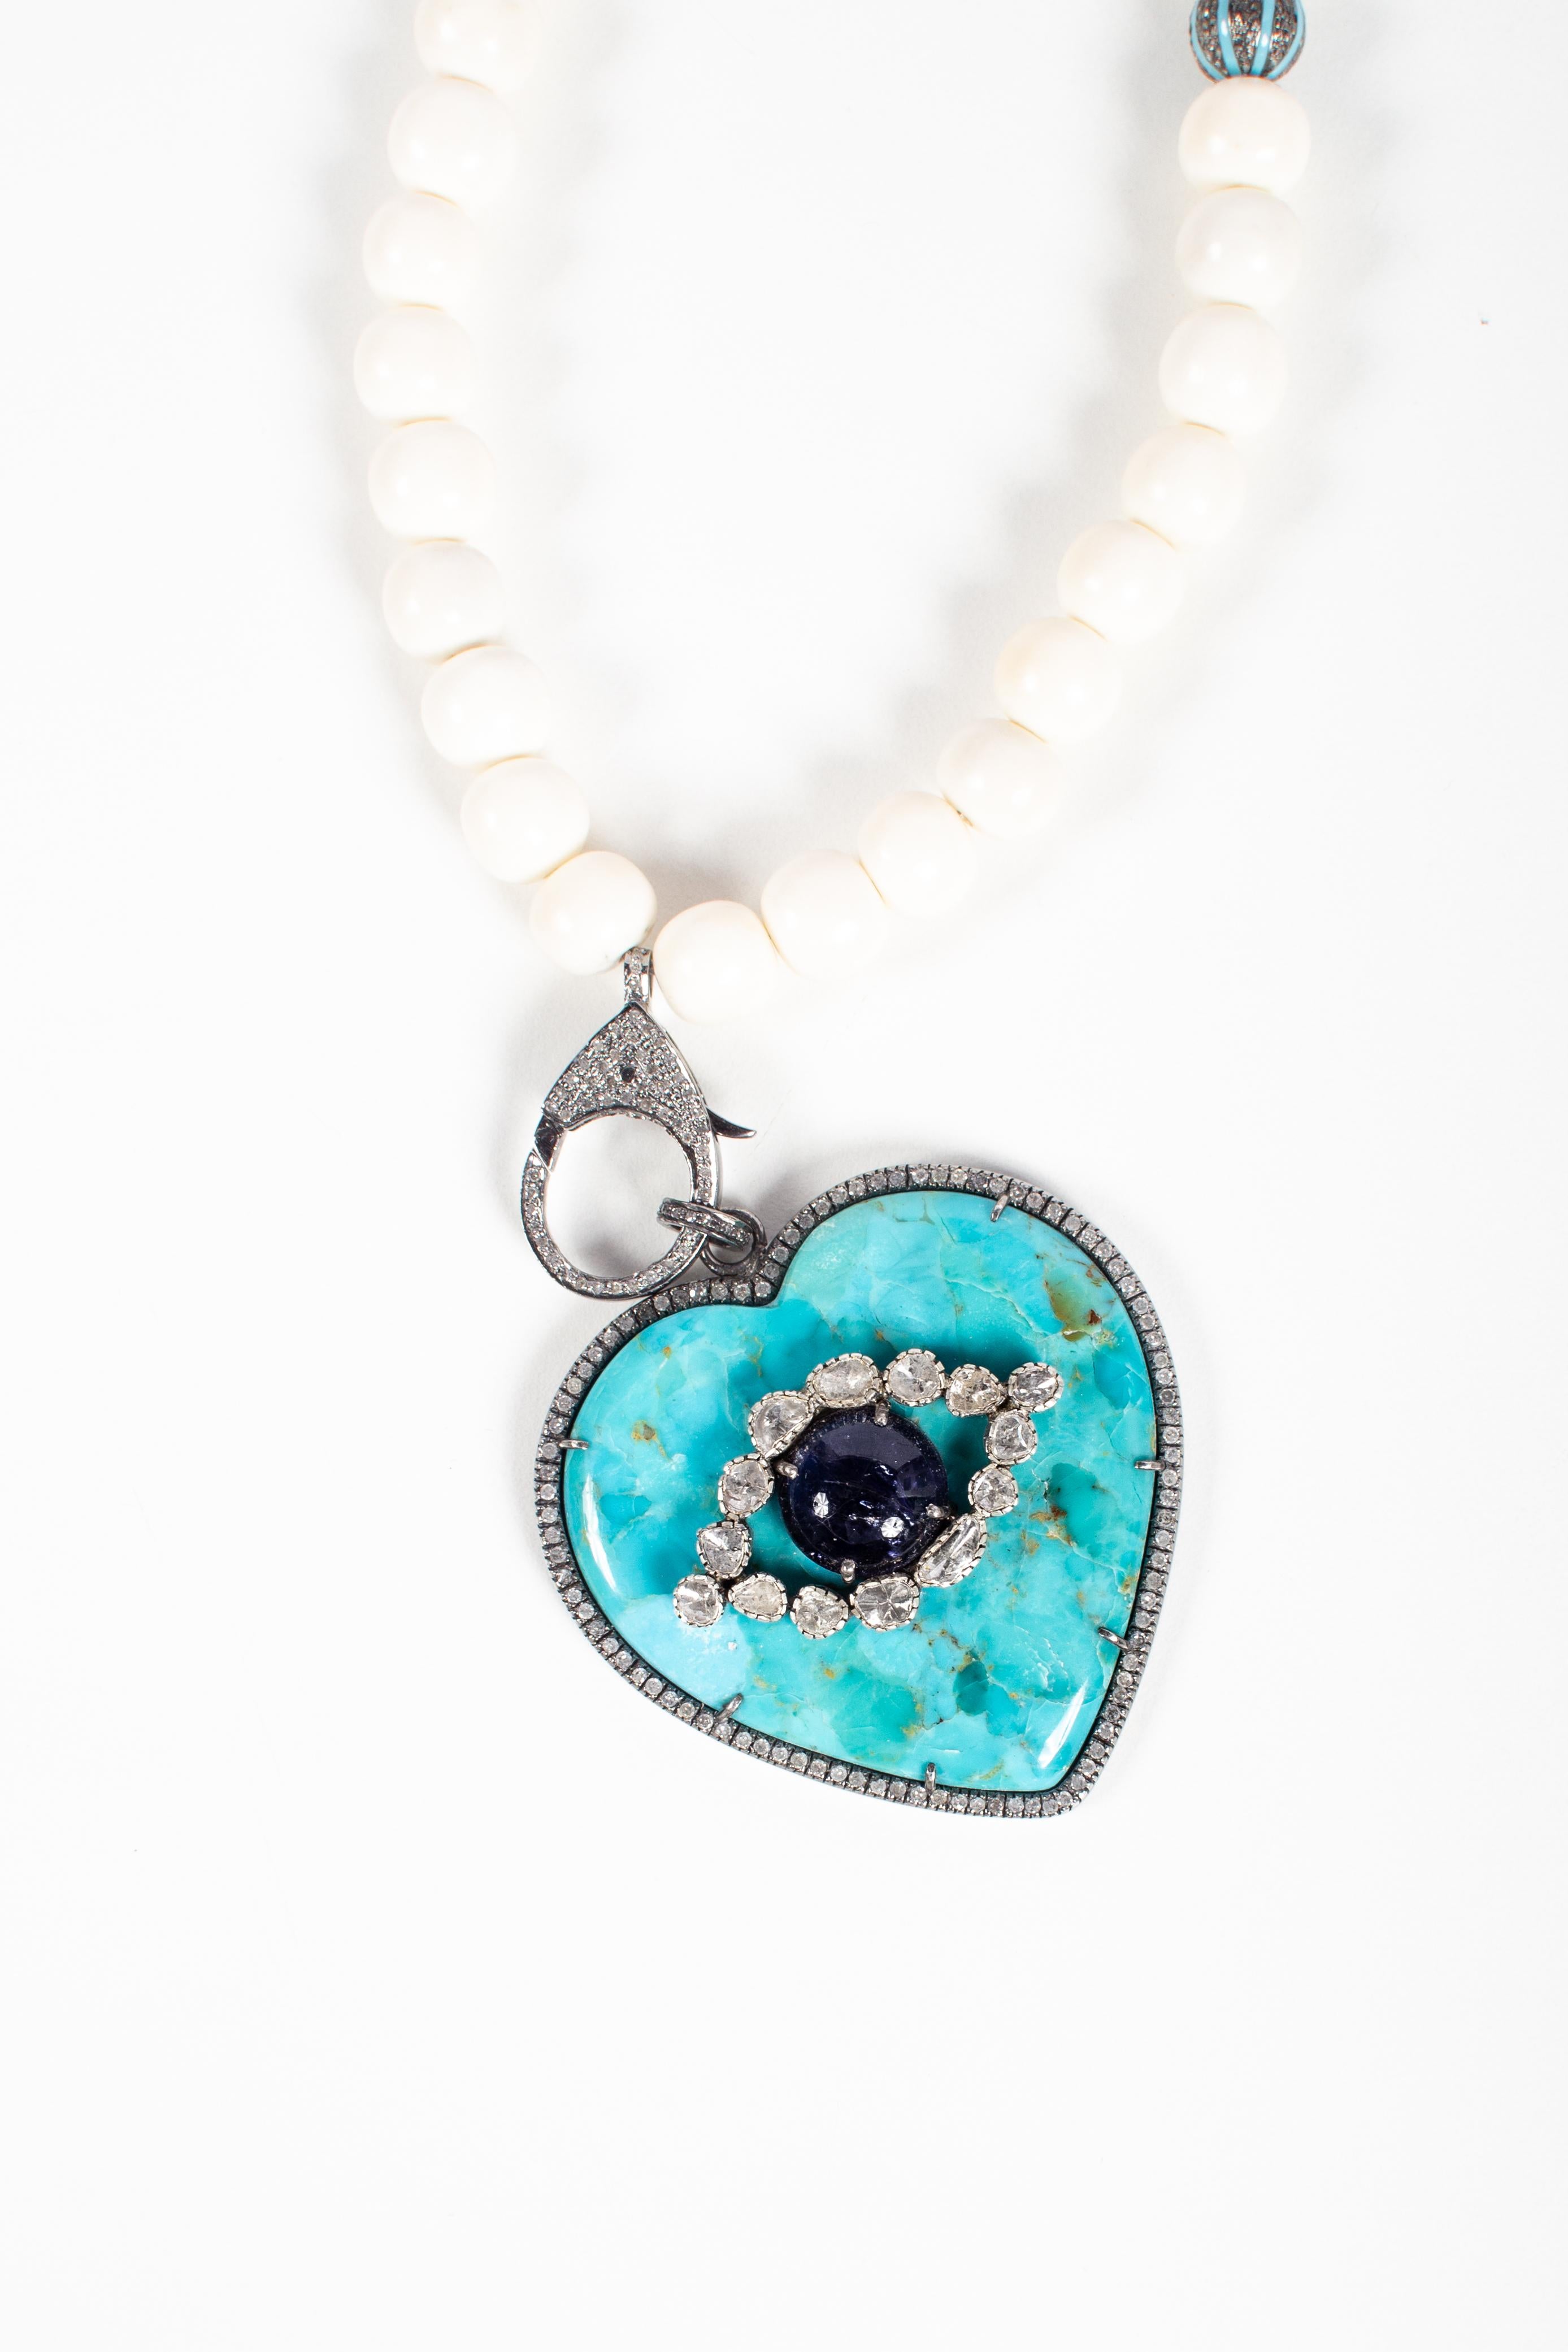 Contemporary Clarissa Bronfman Turquoise, Diamond, Bone, Sapphire Diamond Heart Necklace